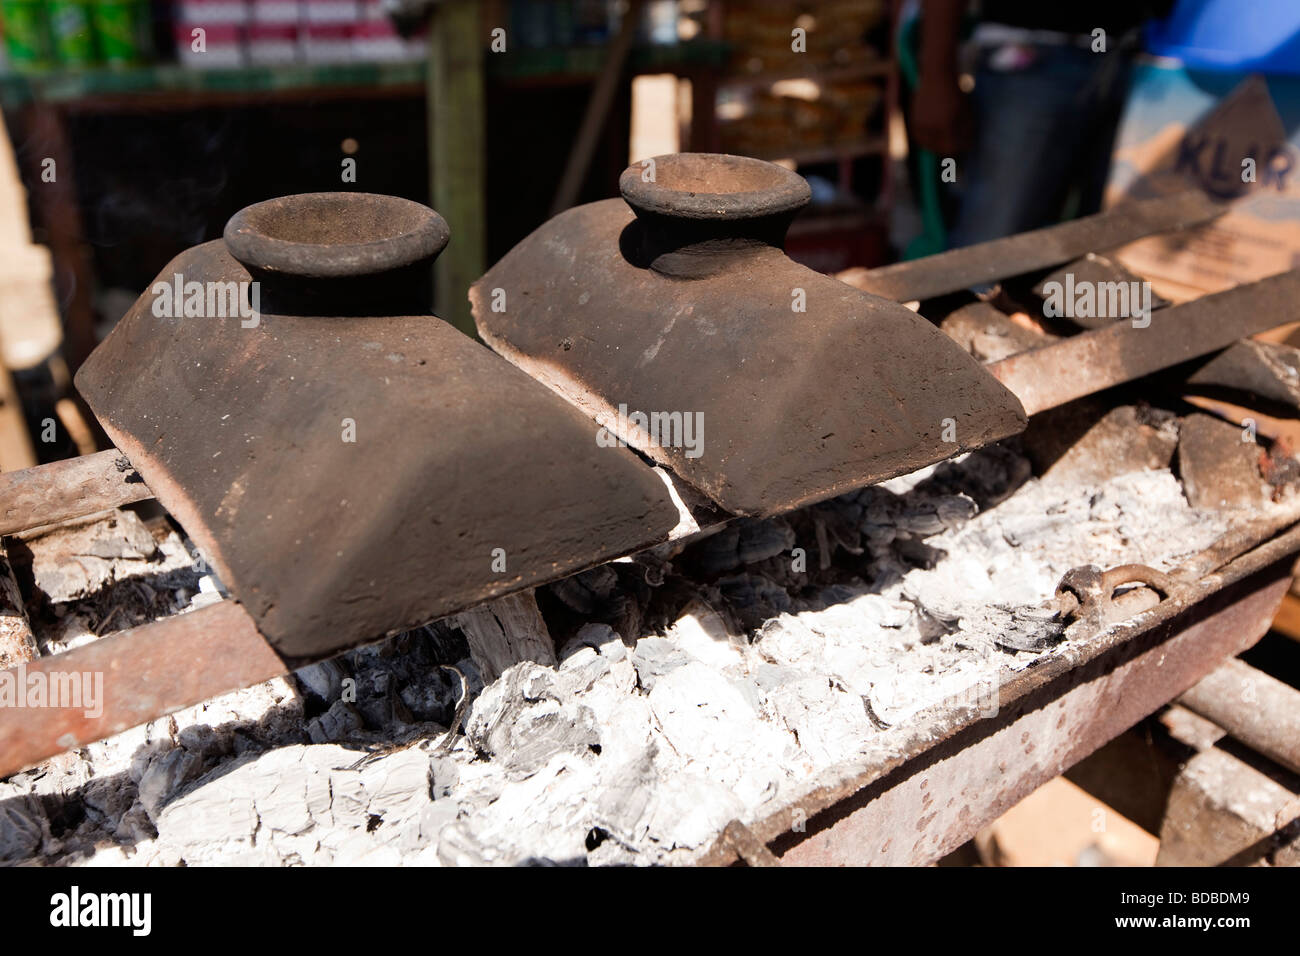 Indonesia Sulawesi Barru traditional ceramic bugis cooking pots on roadside café grill Stock Photo